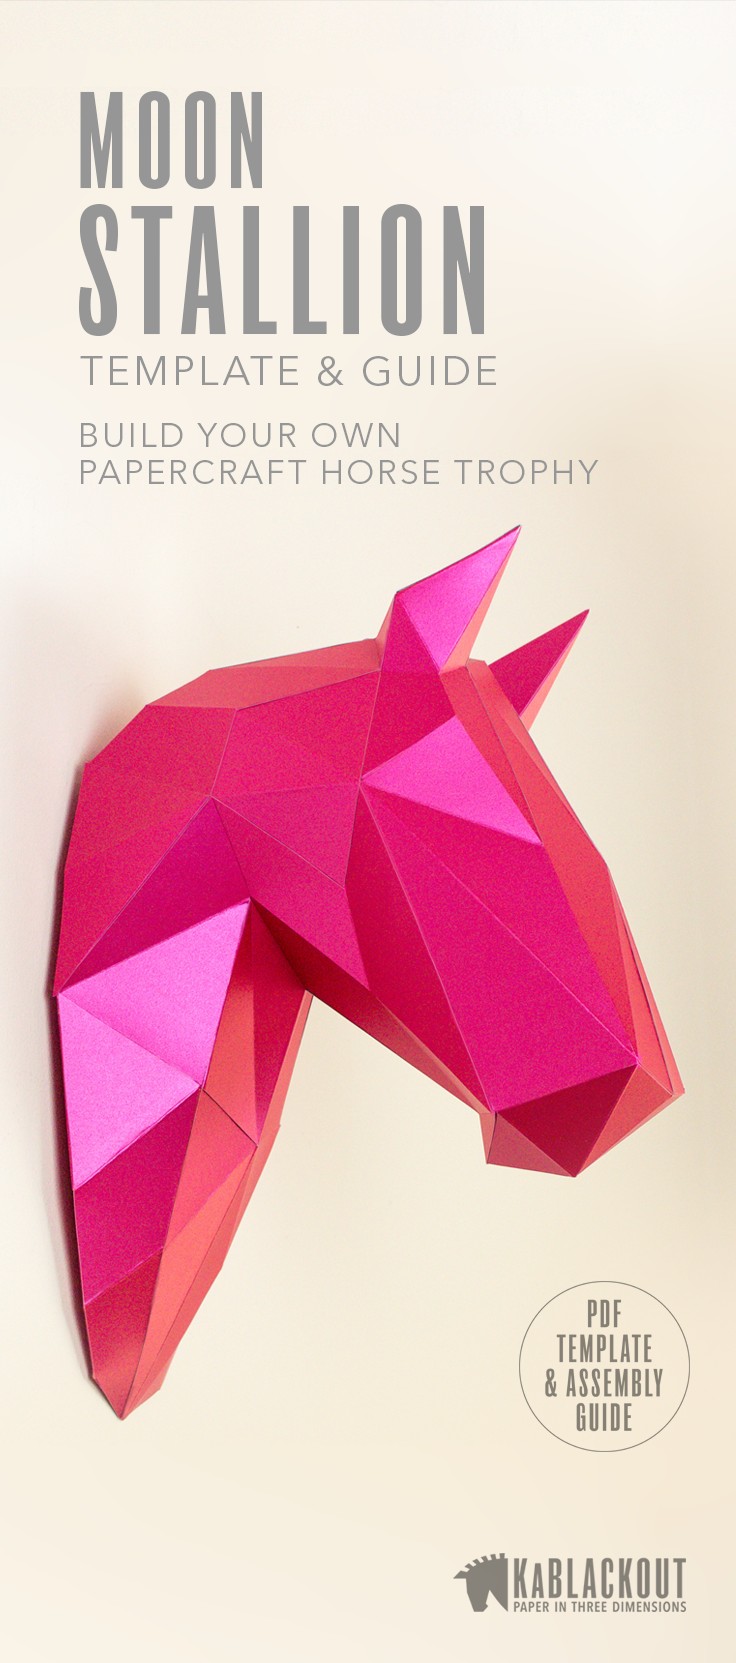 3d Papercraft Horse Papercraft Diy Horse Template Low Poly Horse 3d Wall Trophy